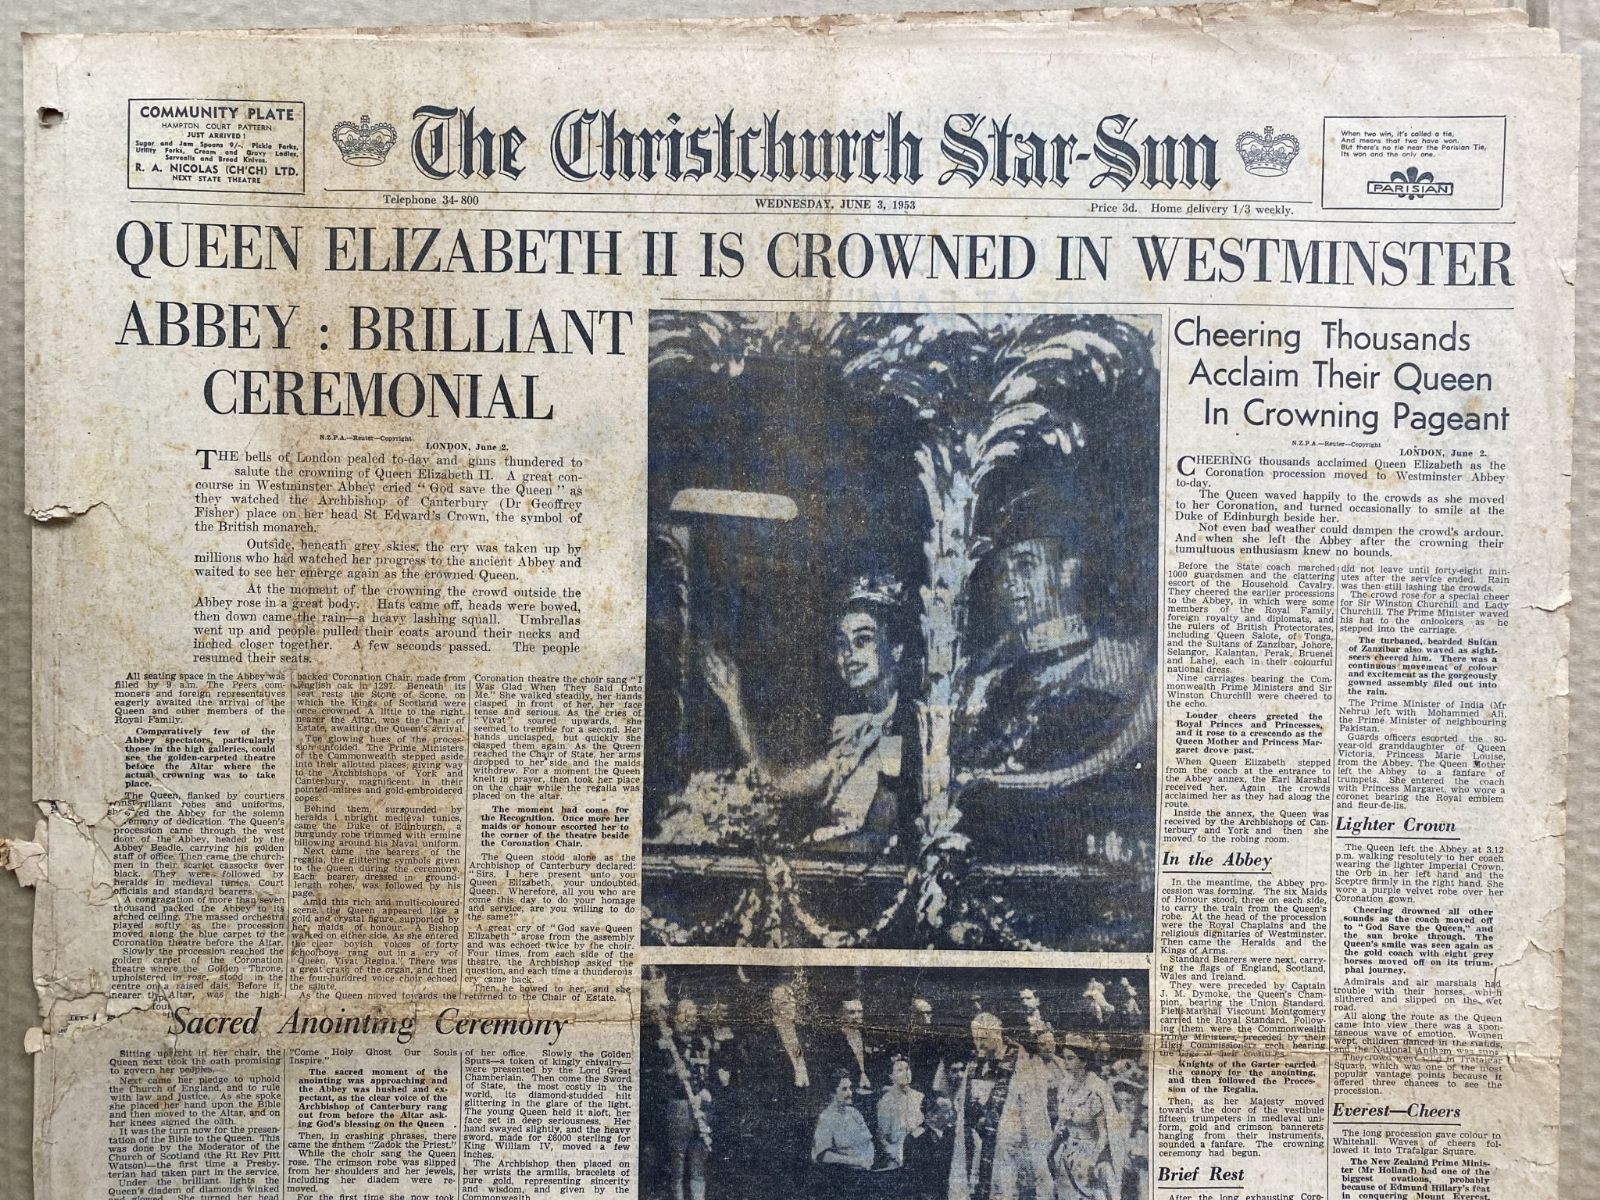 OLD NEWSPAPER: The Christchurch Star-Sun, 3 June 1953 - Queen Elizabeth crowned